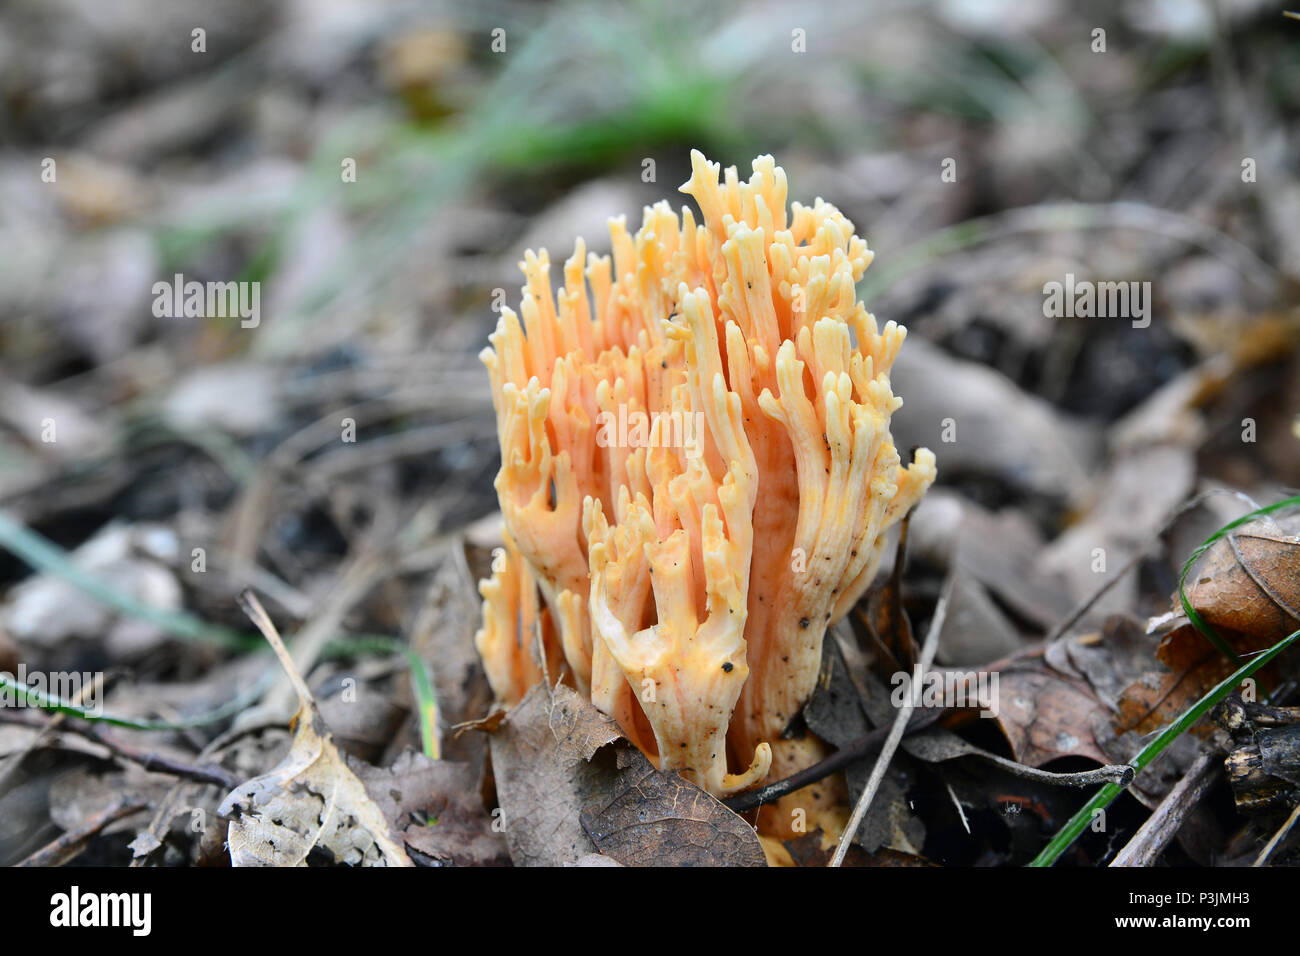 ramaria formosa coral mushroo on the ground Stock Photo